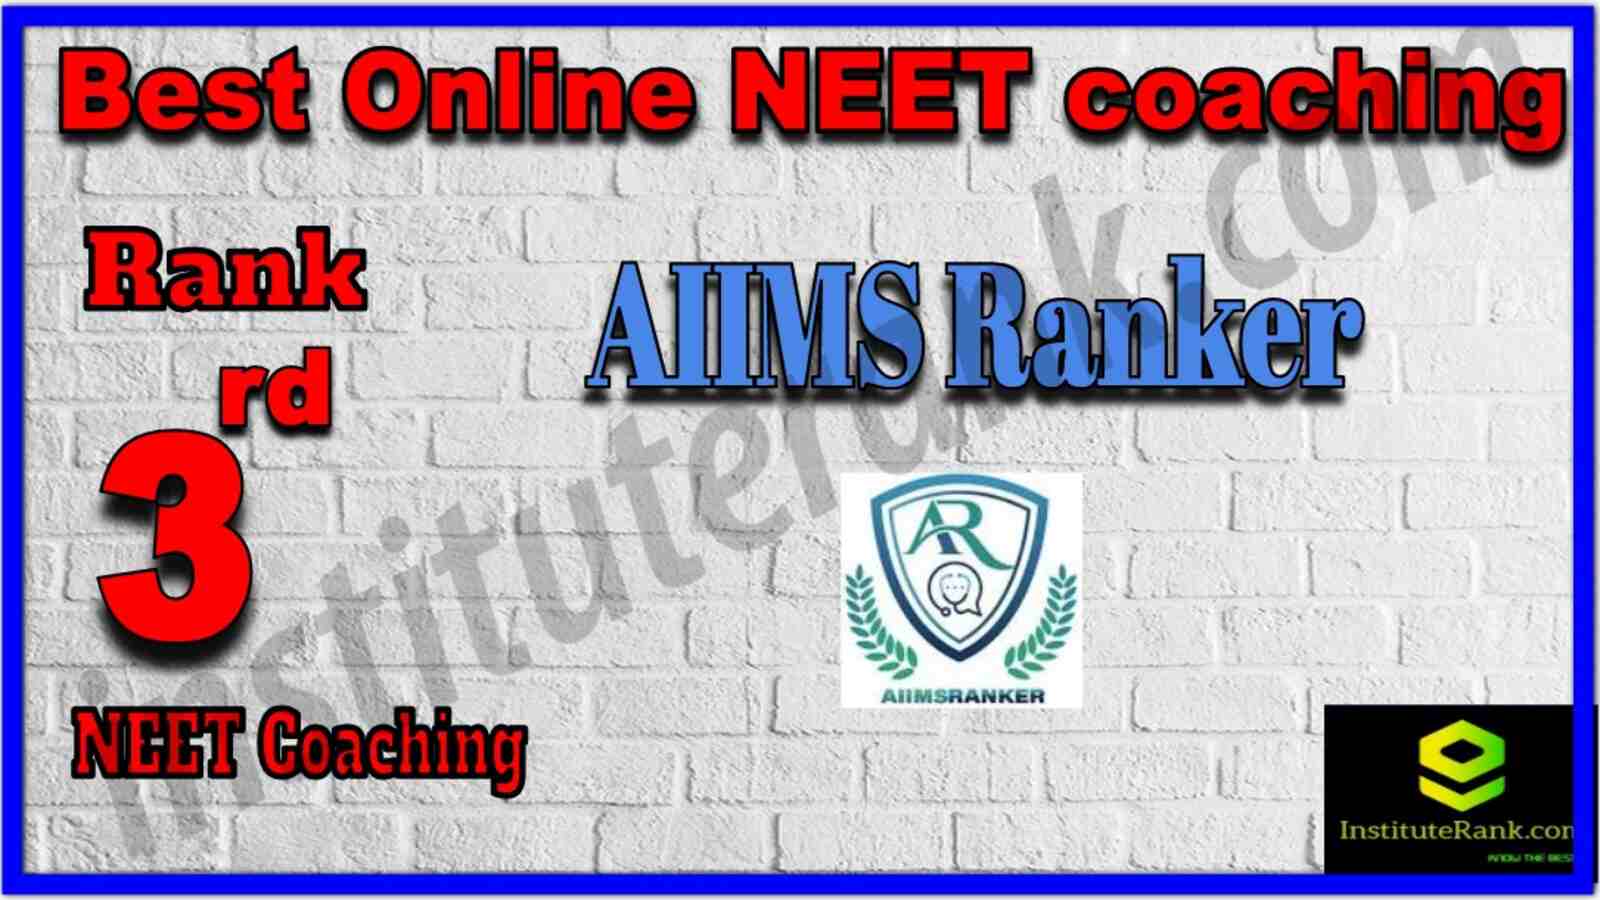 Rank 3 Best online NEET Coaching